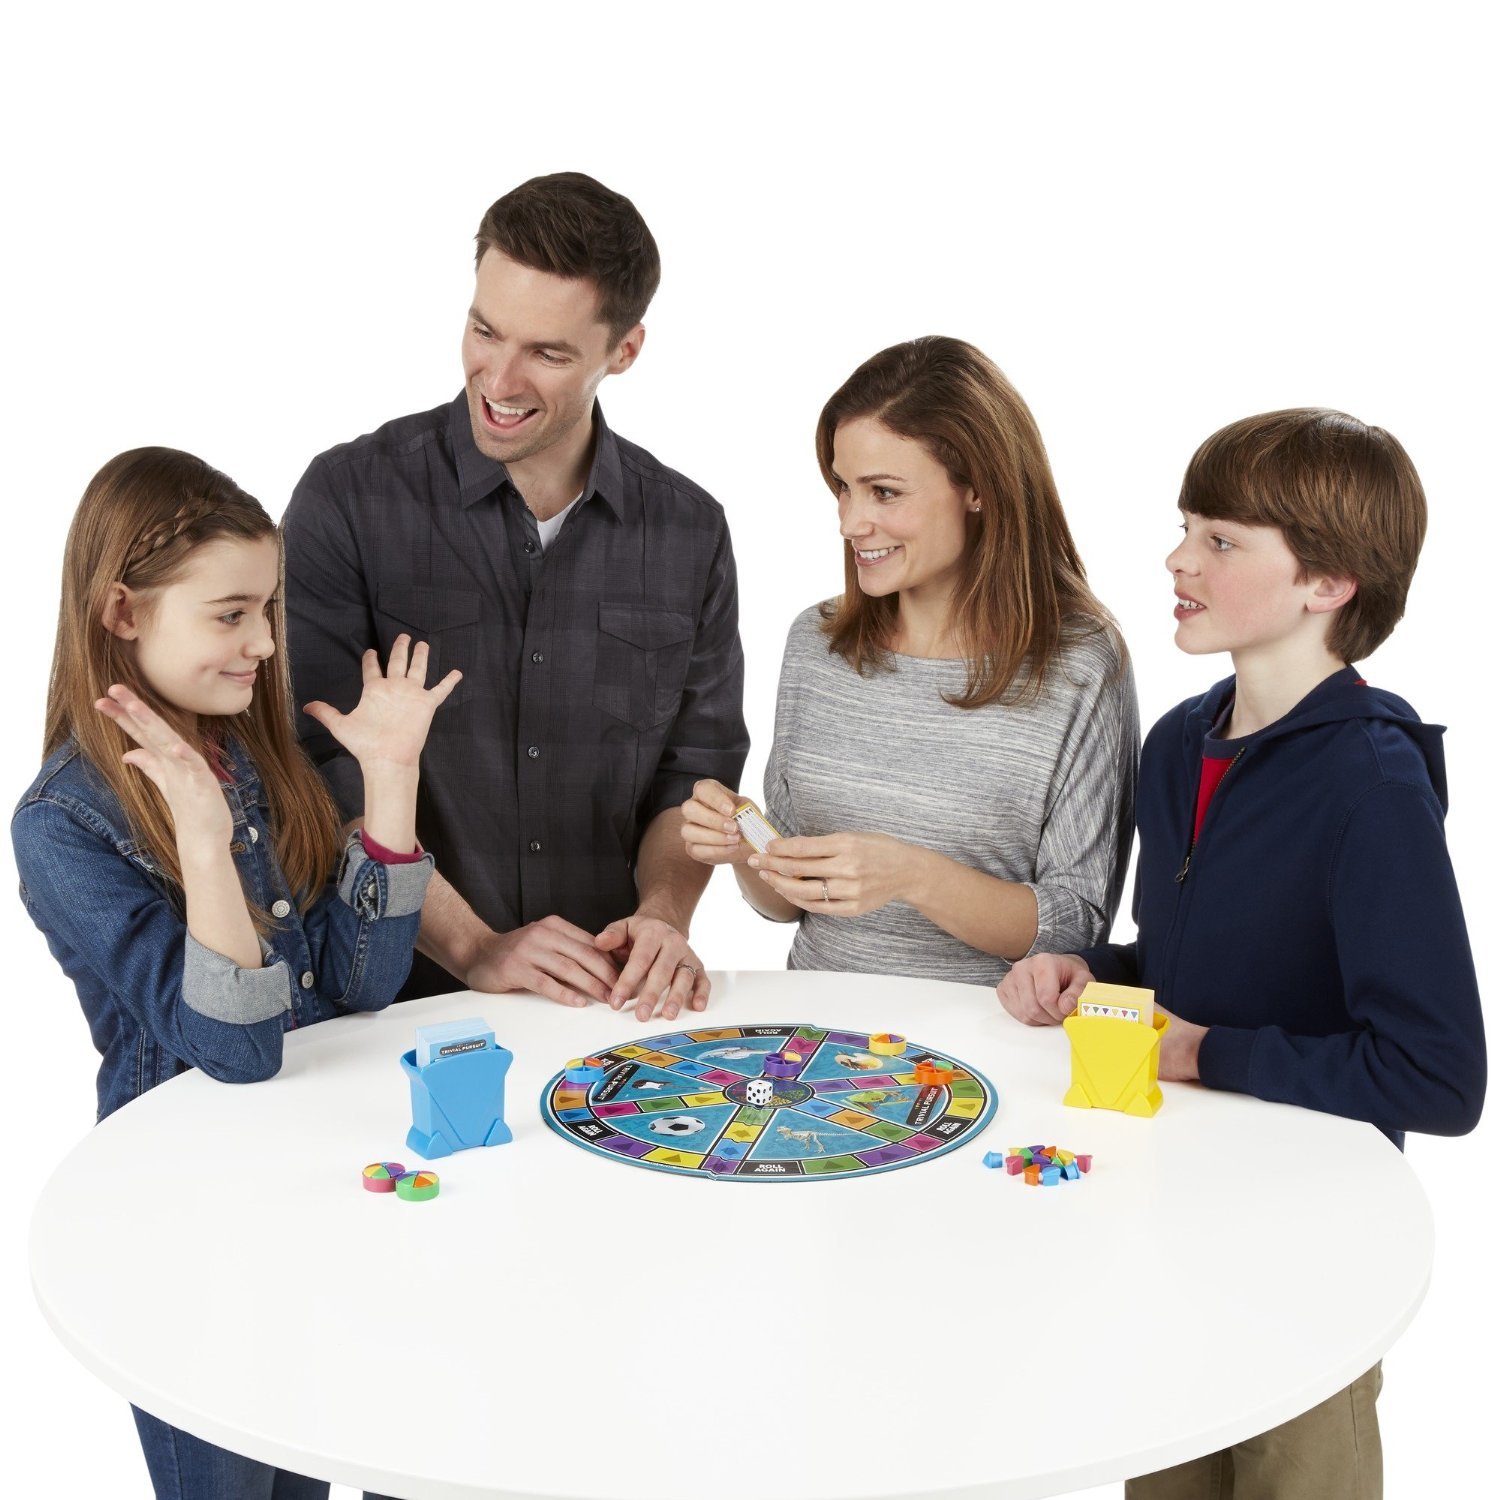 Hasbro Games Trivial Pursuit Family Edition (Amazon Exclusive)